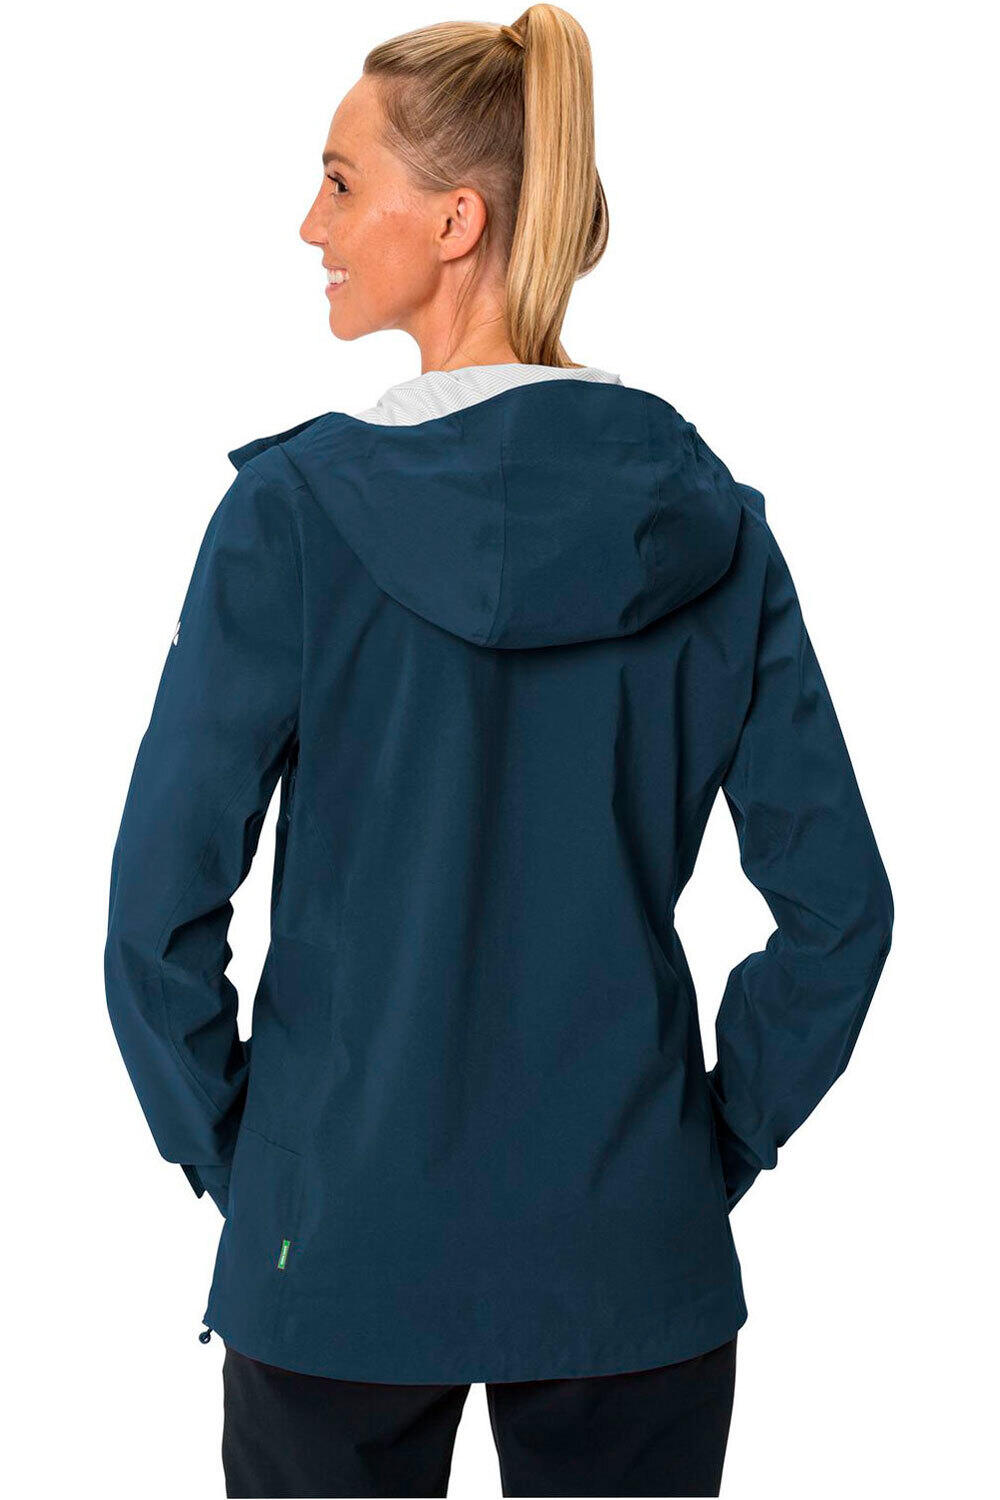 Vaude chaqueta impermeable mujer Women  s Simony 2,5L Jacket IV vista trasera